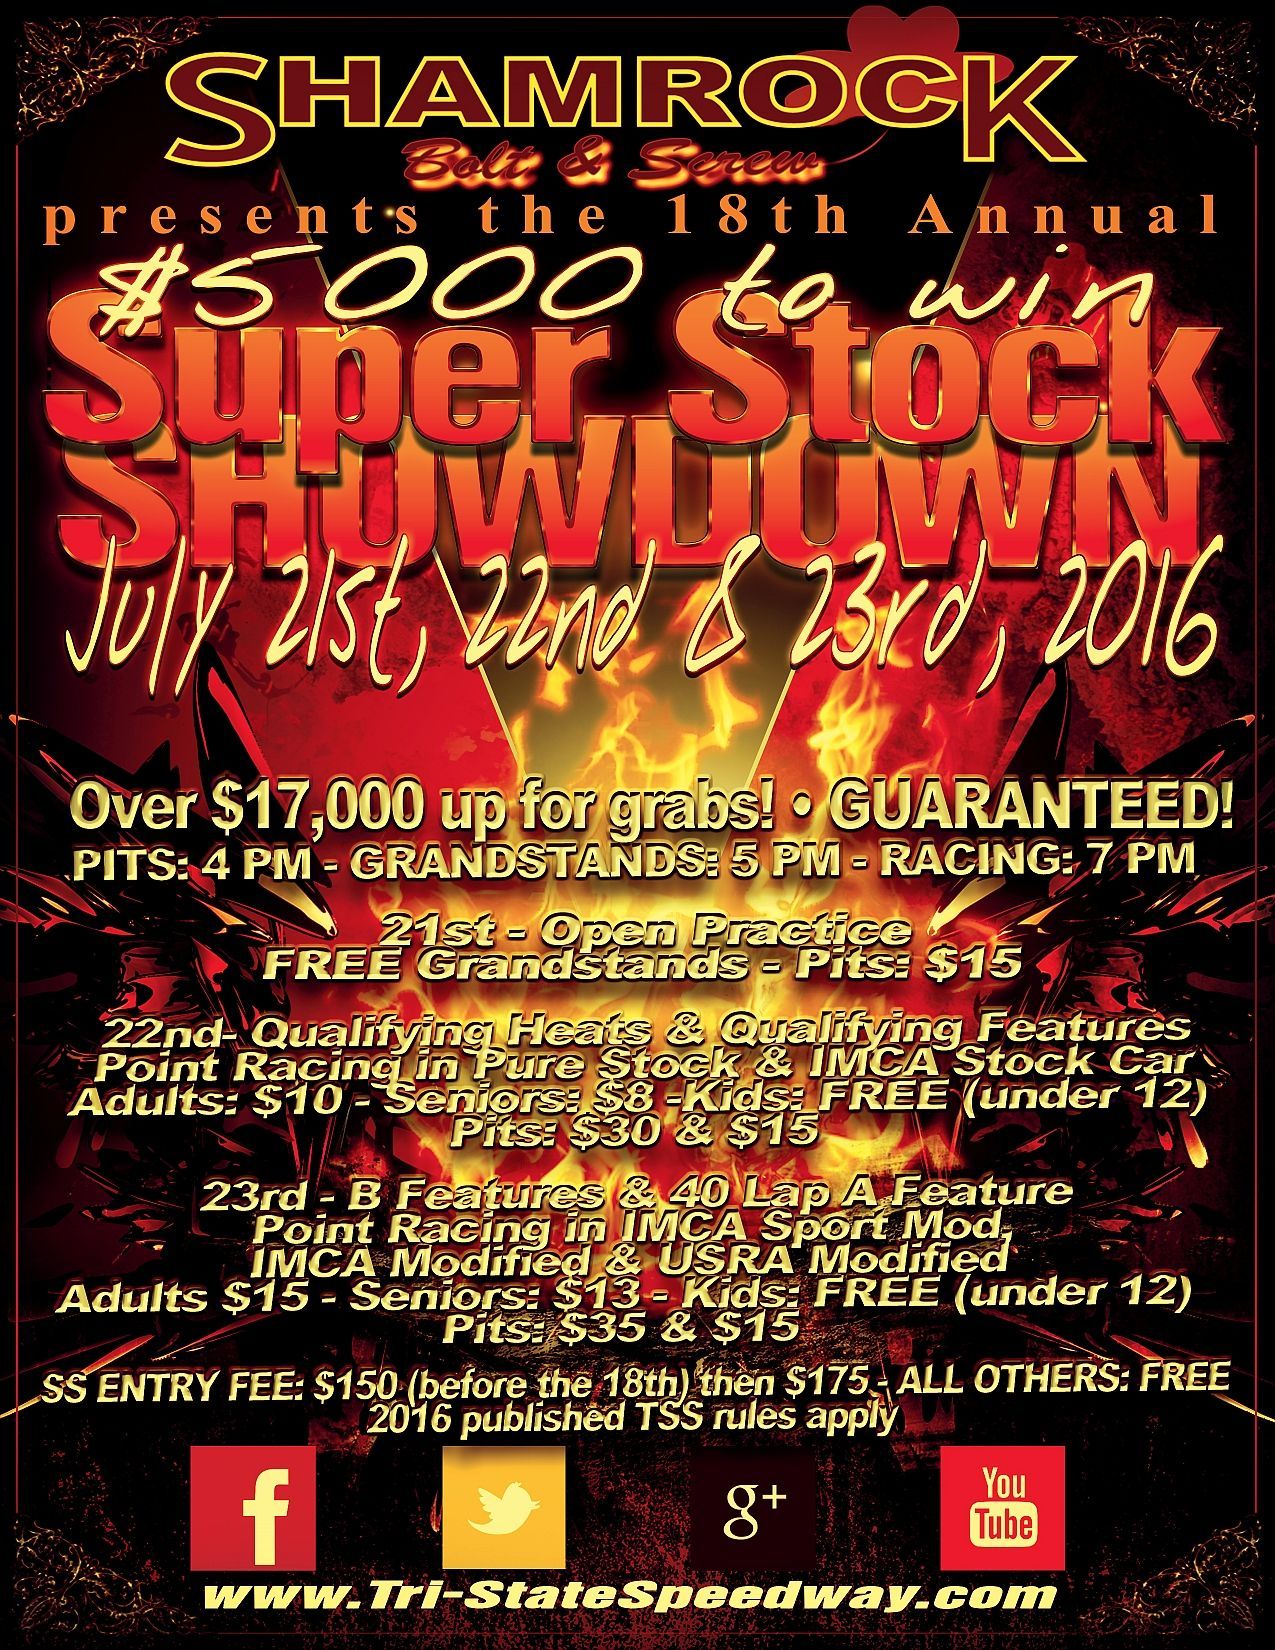 18th Annual $5,000 to Win Super Stock Showdown presented by Shamrock Bolt & Screw Company